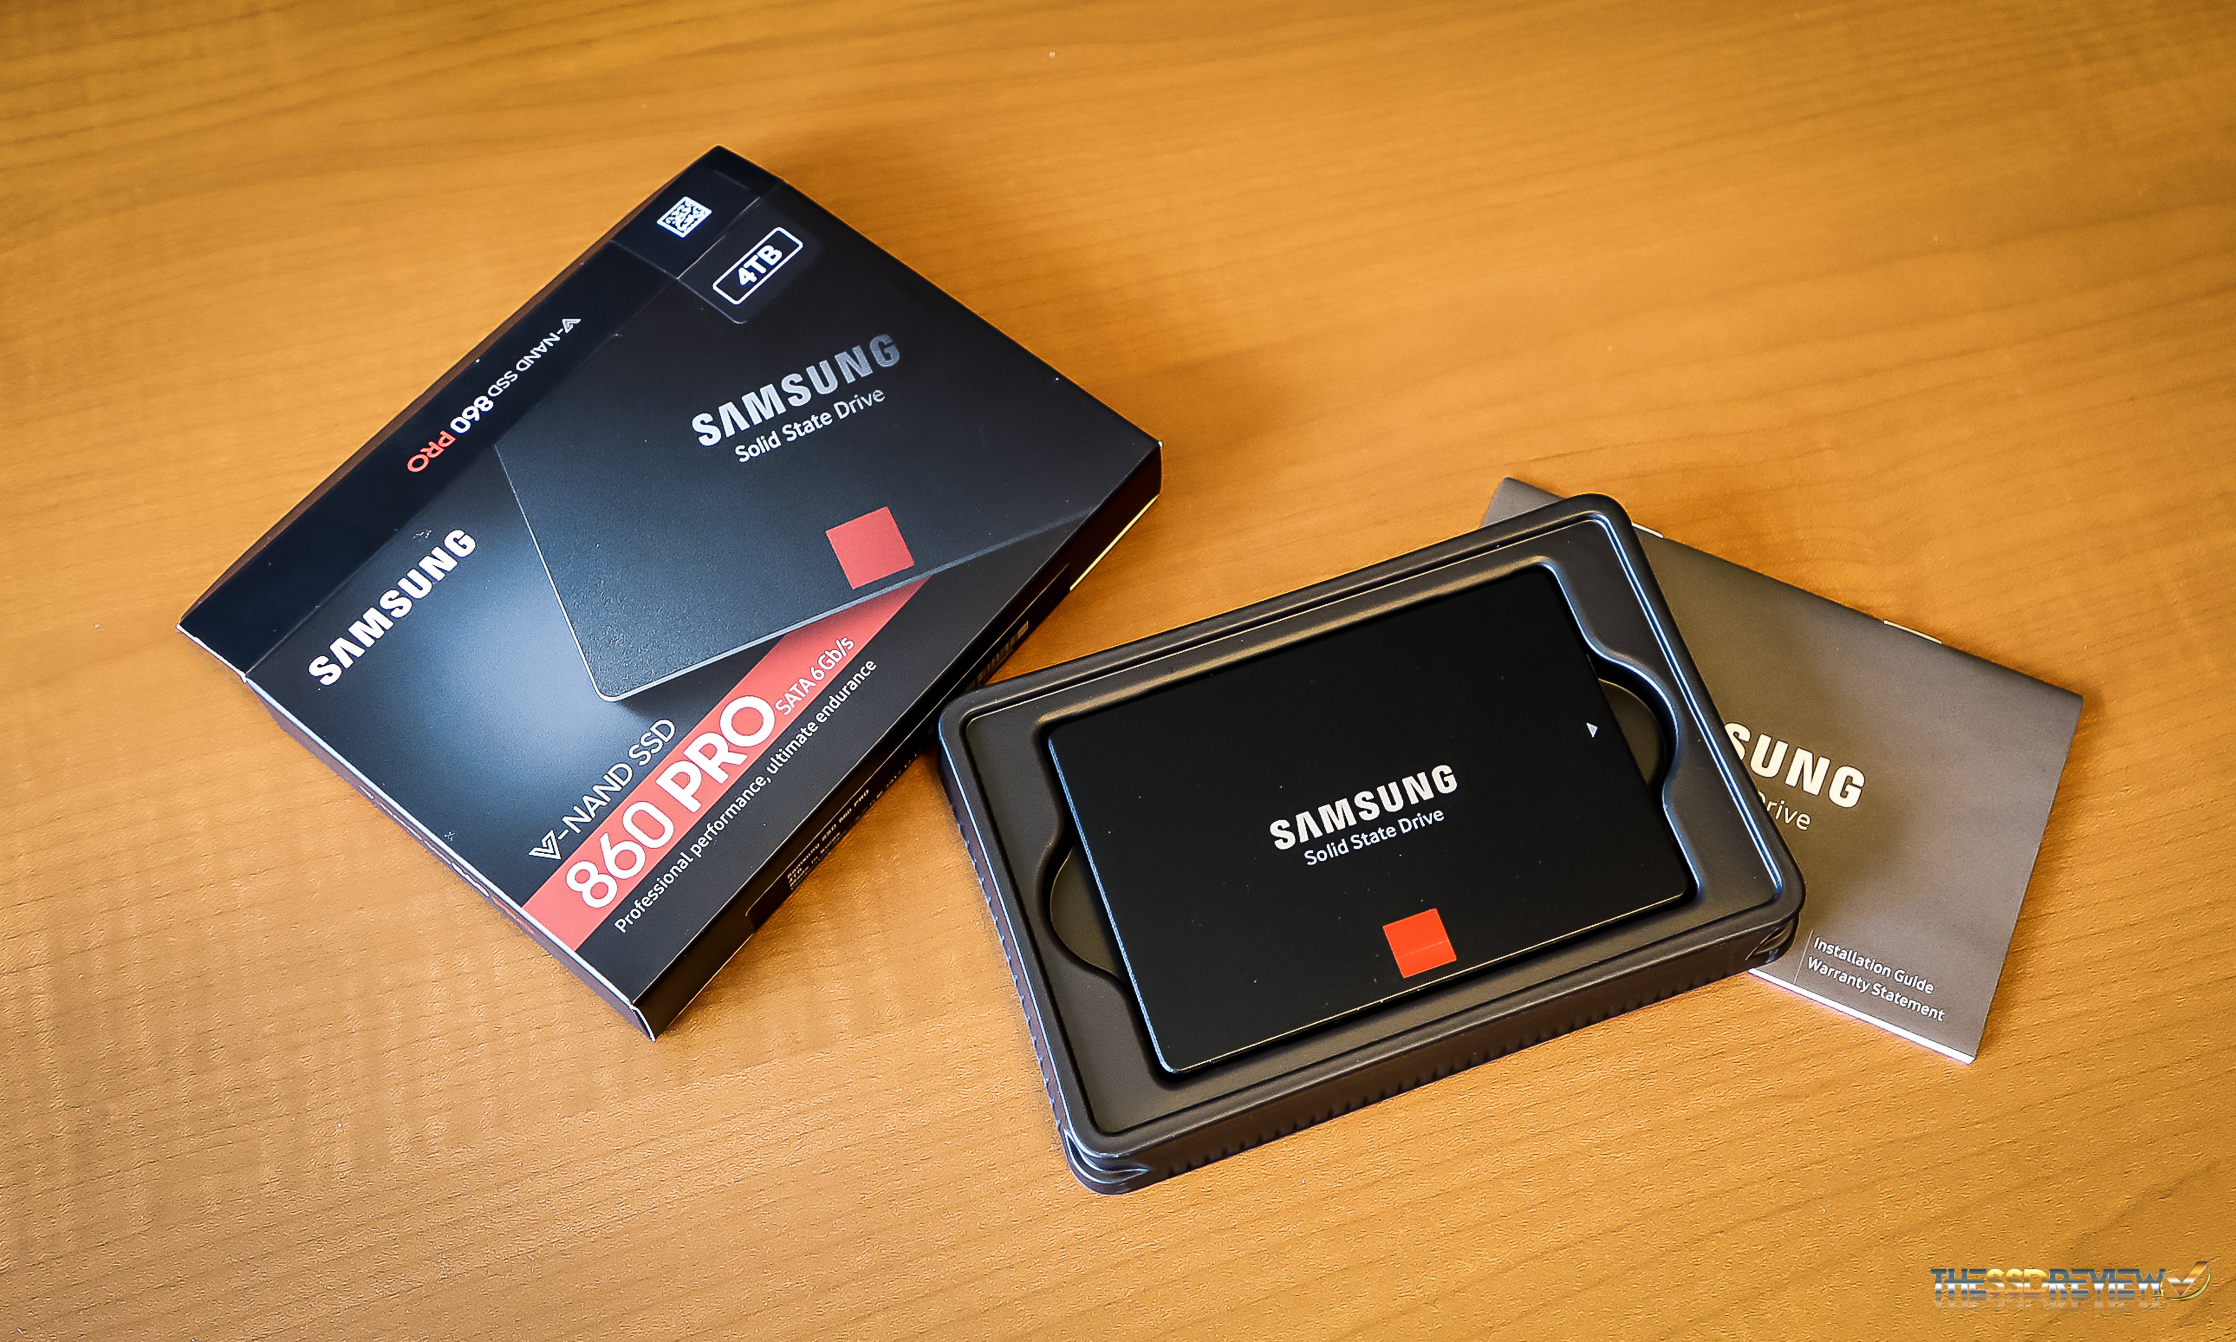 Samsung 860 Pro 512 Gb